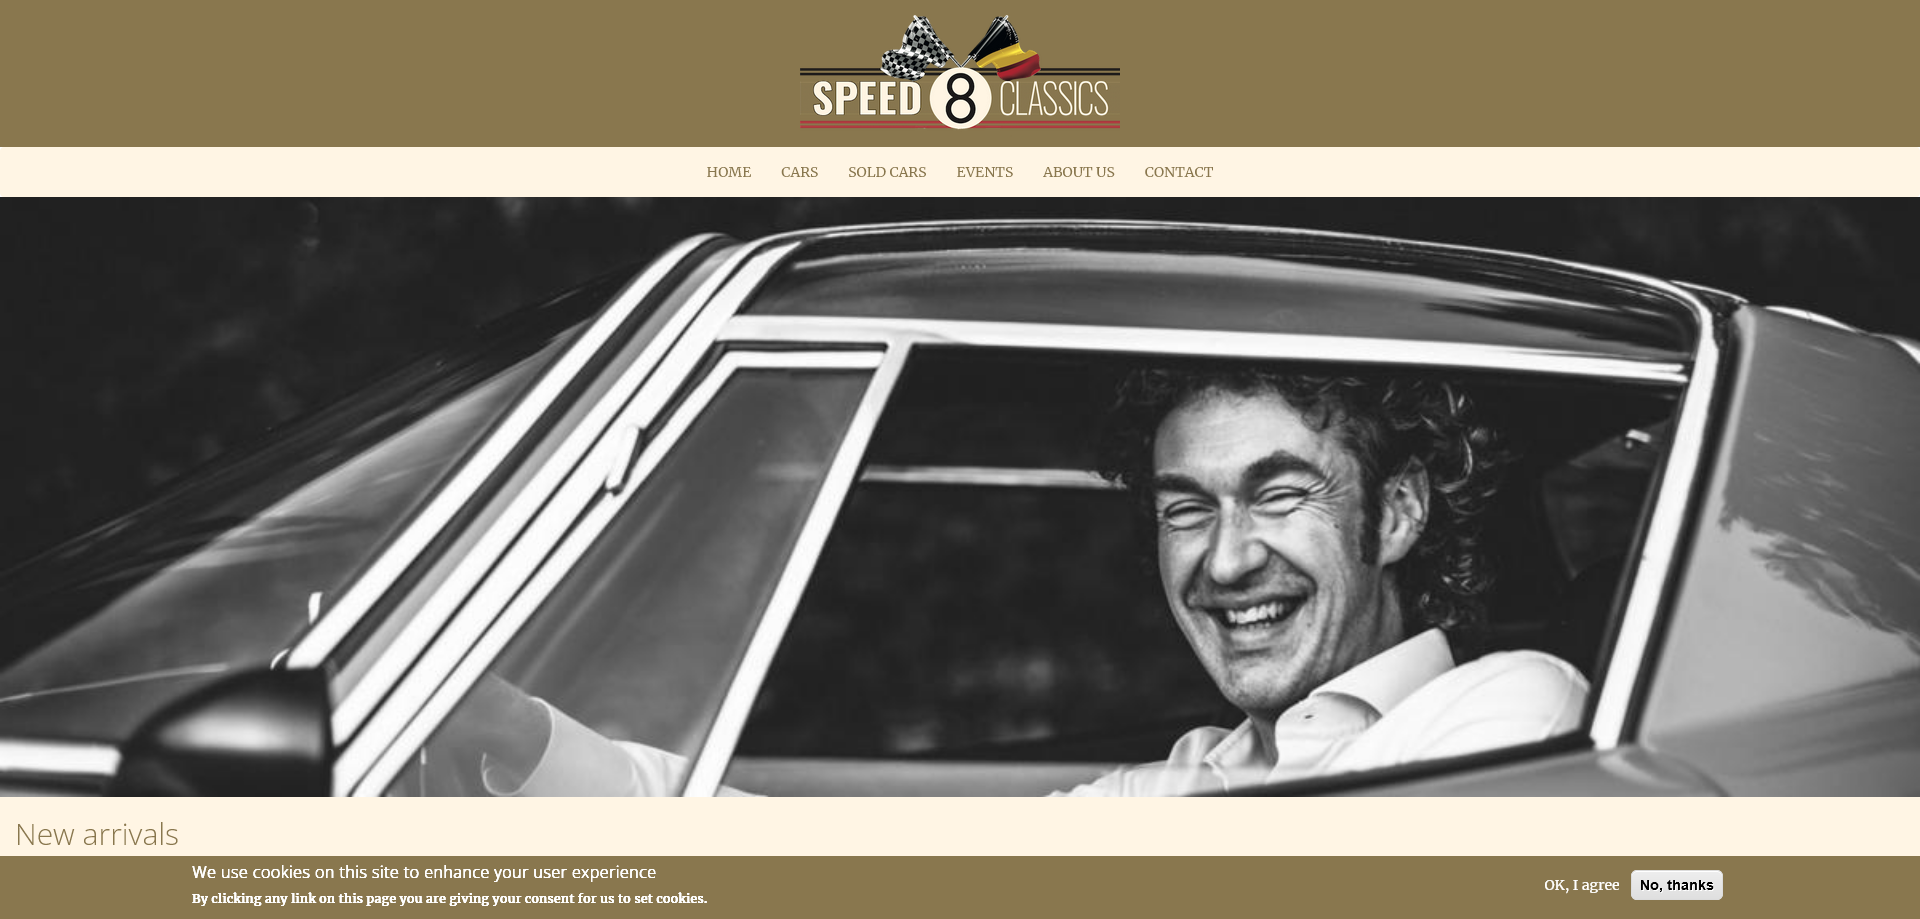 Speed 8 Classics Sales & Service